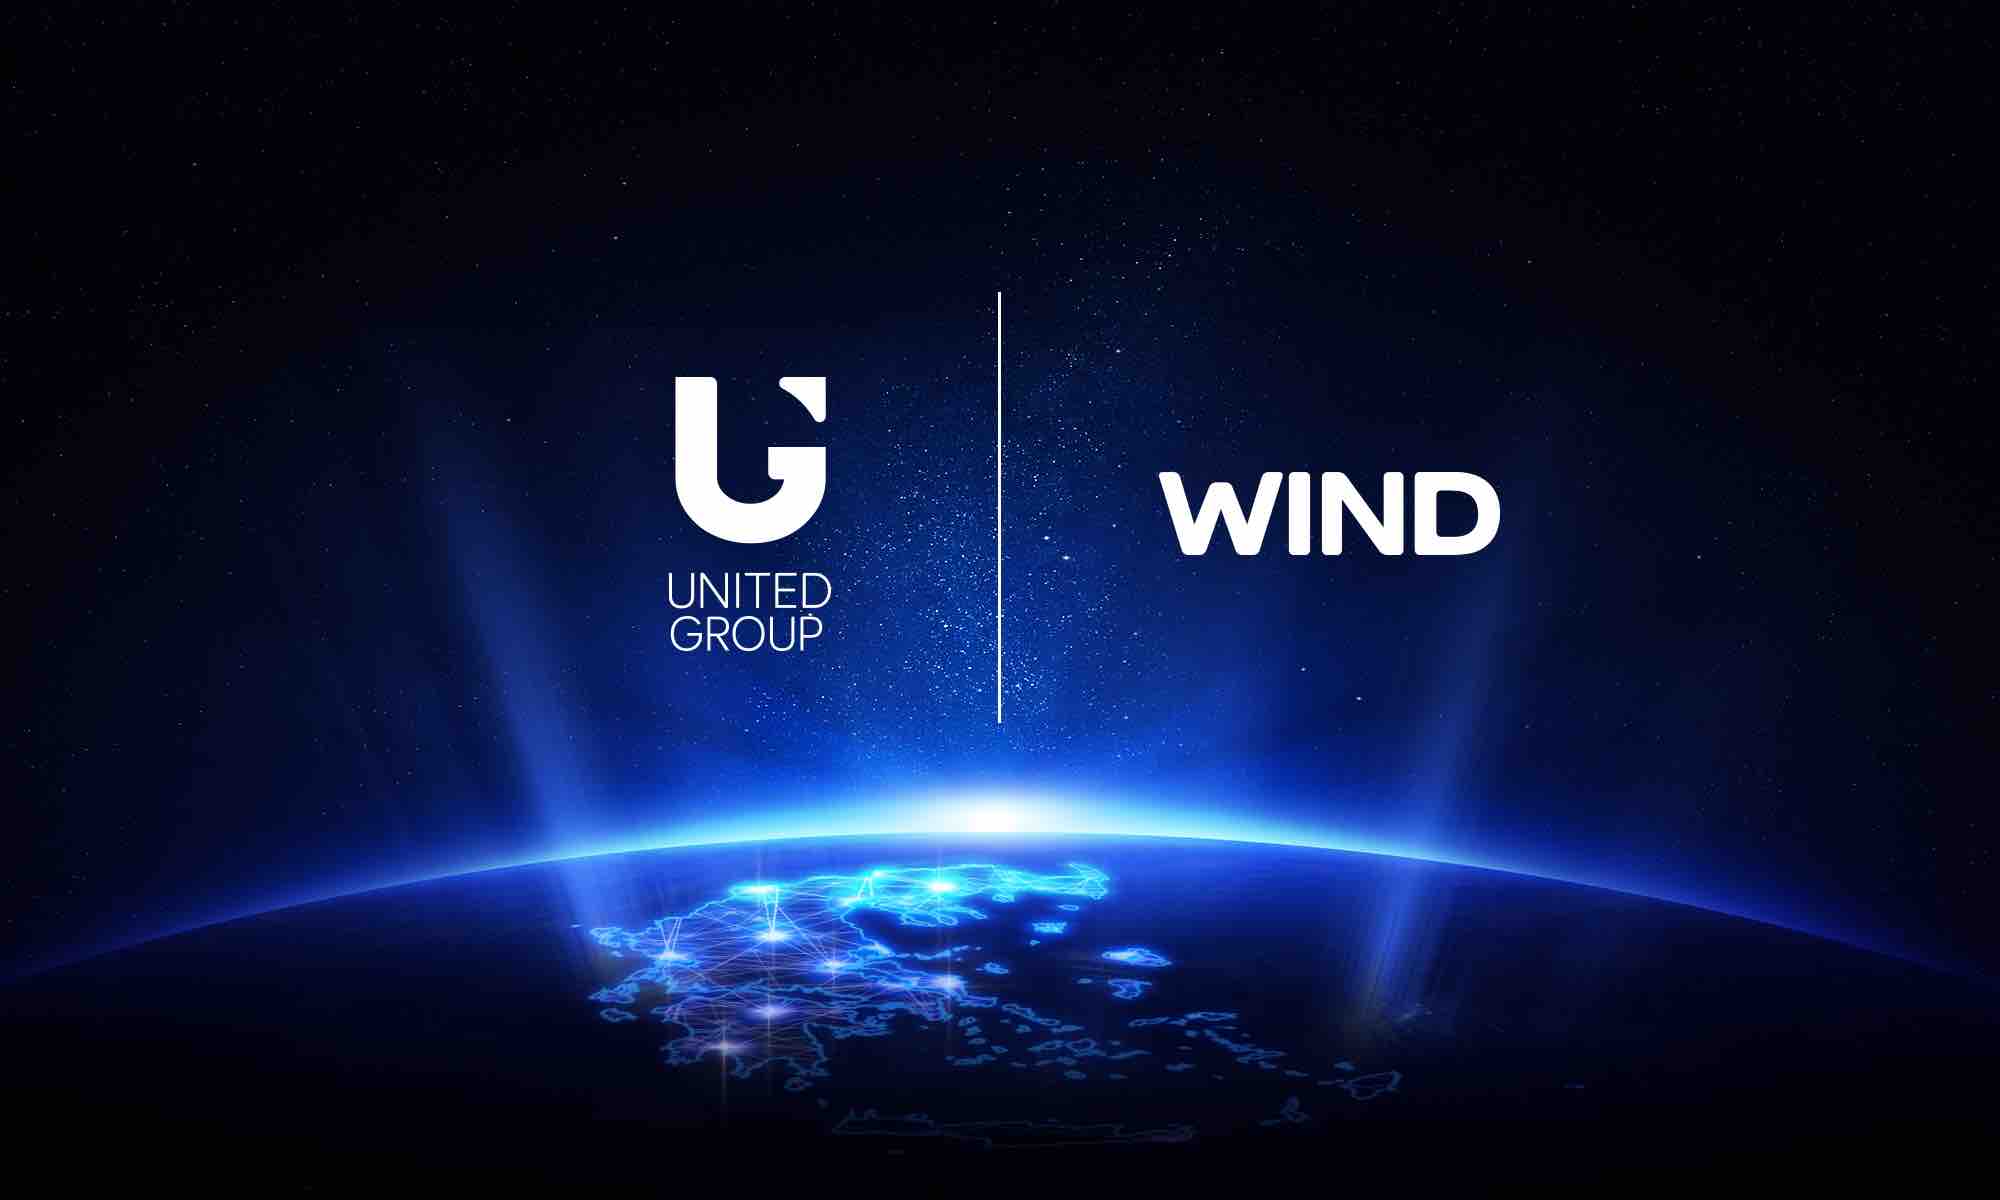 UG Wind